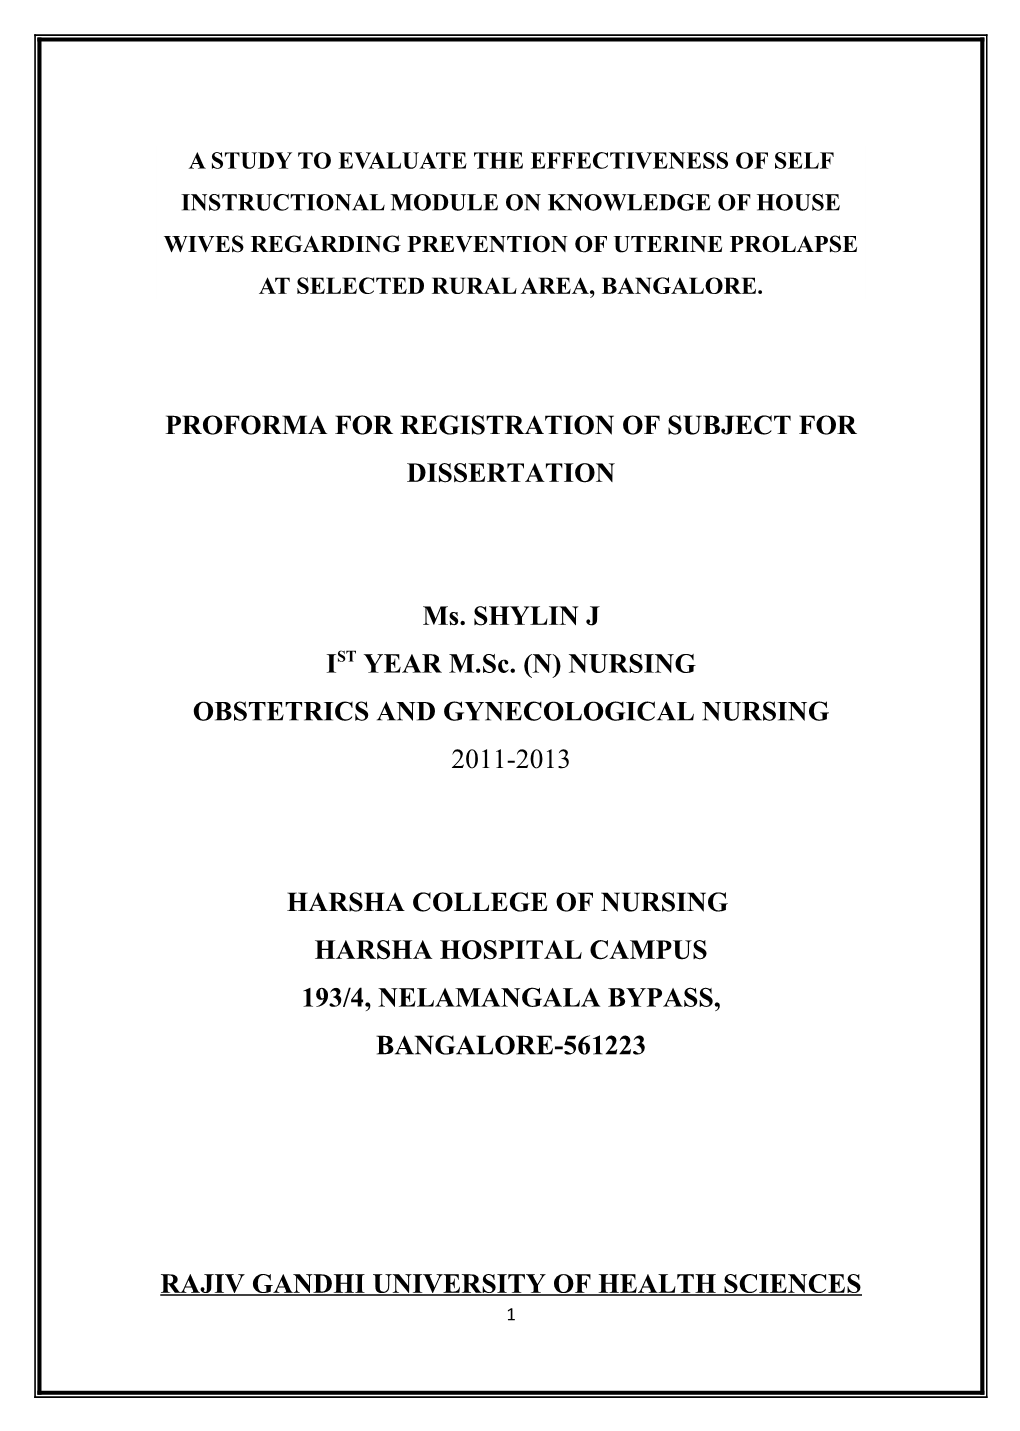 Proforma for Registration of Subject for Dissertation s8